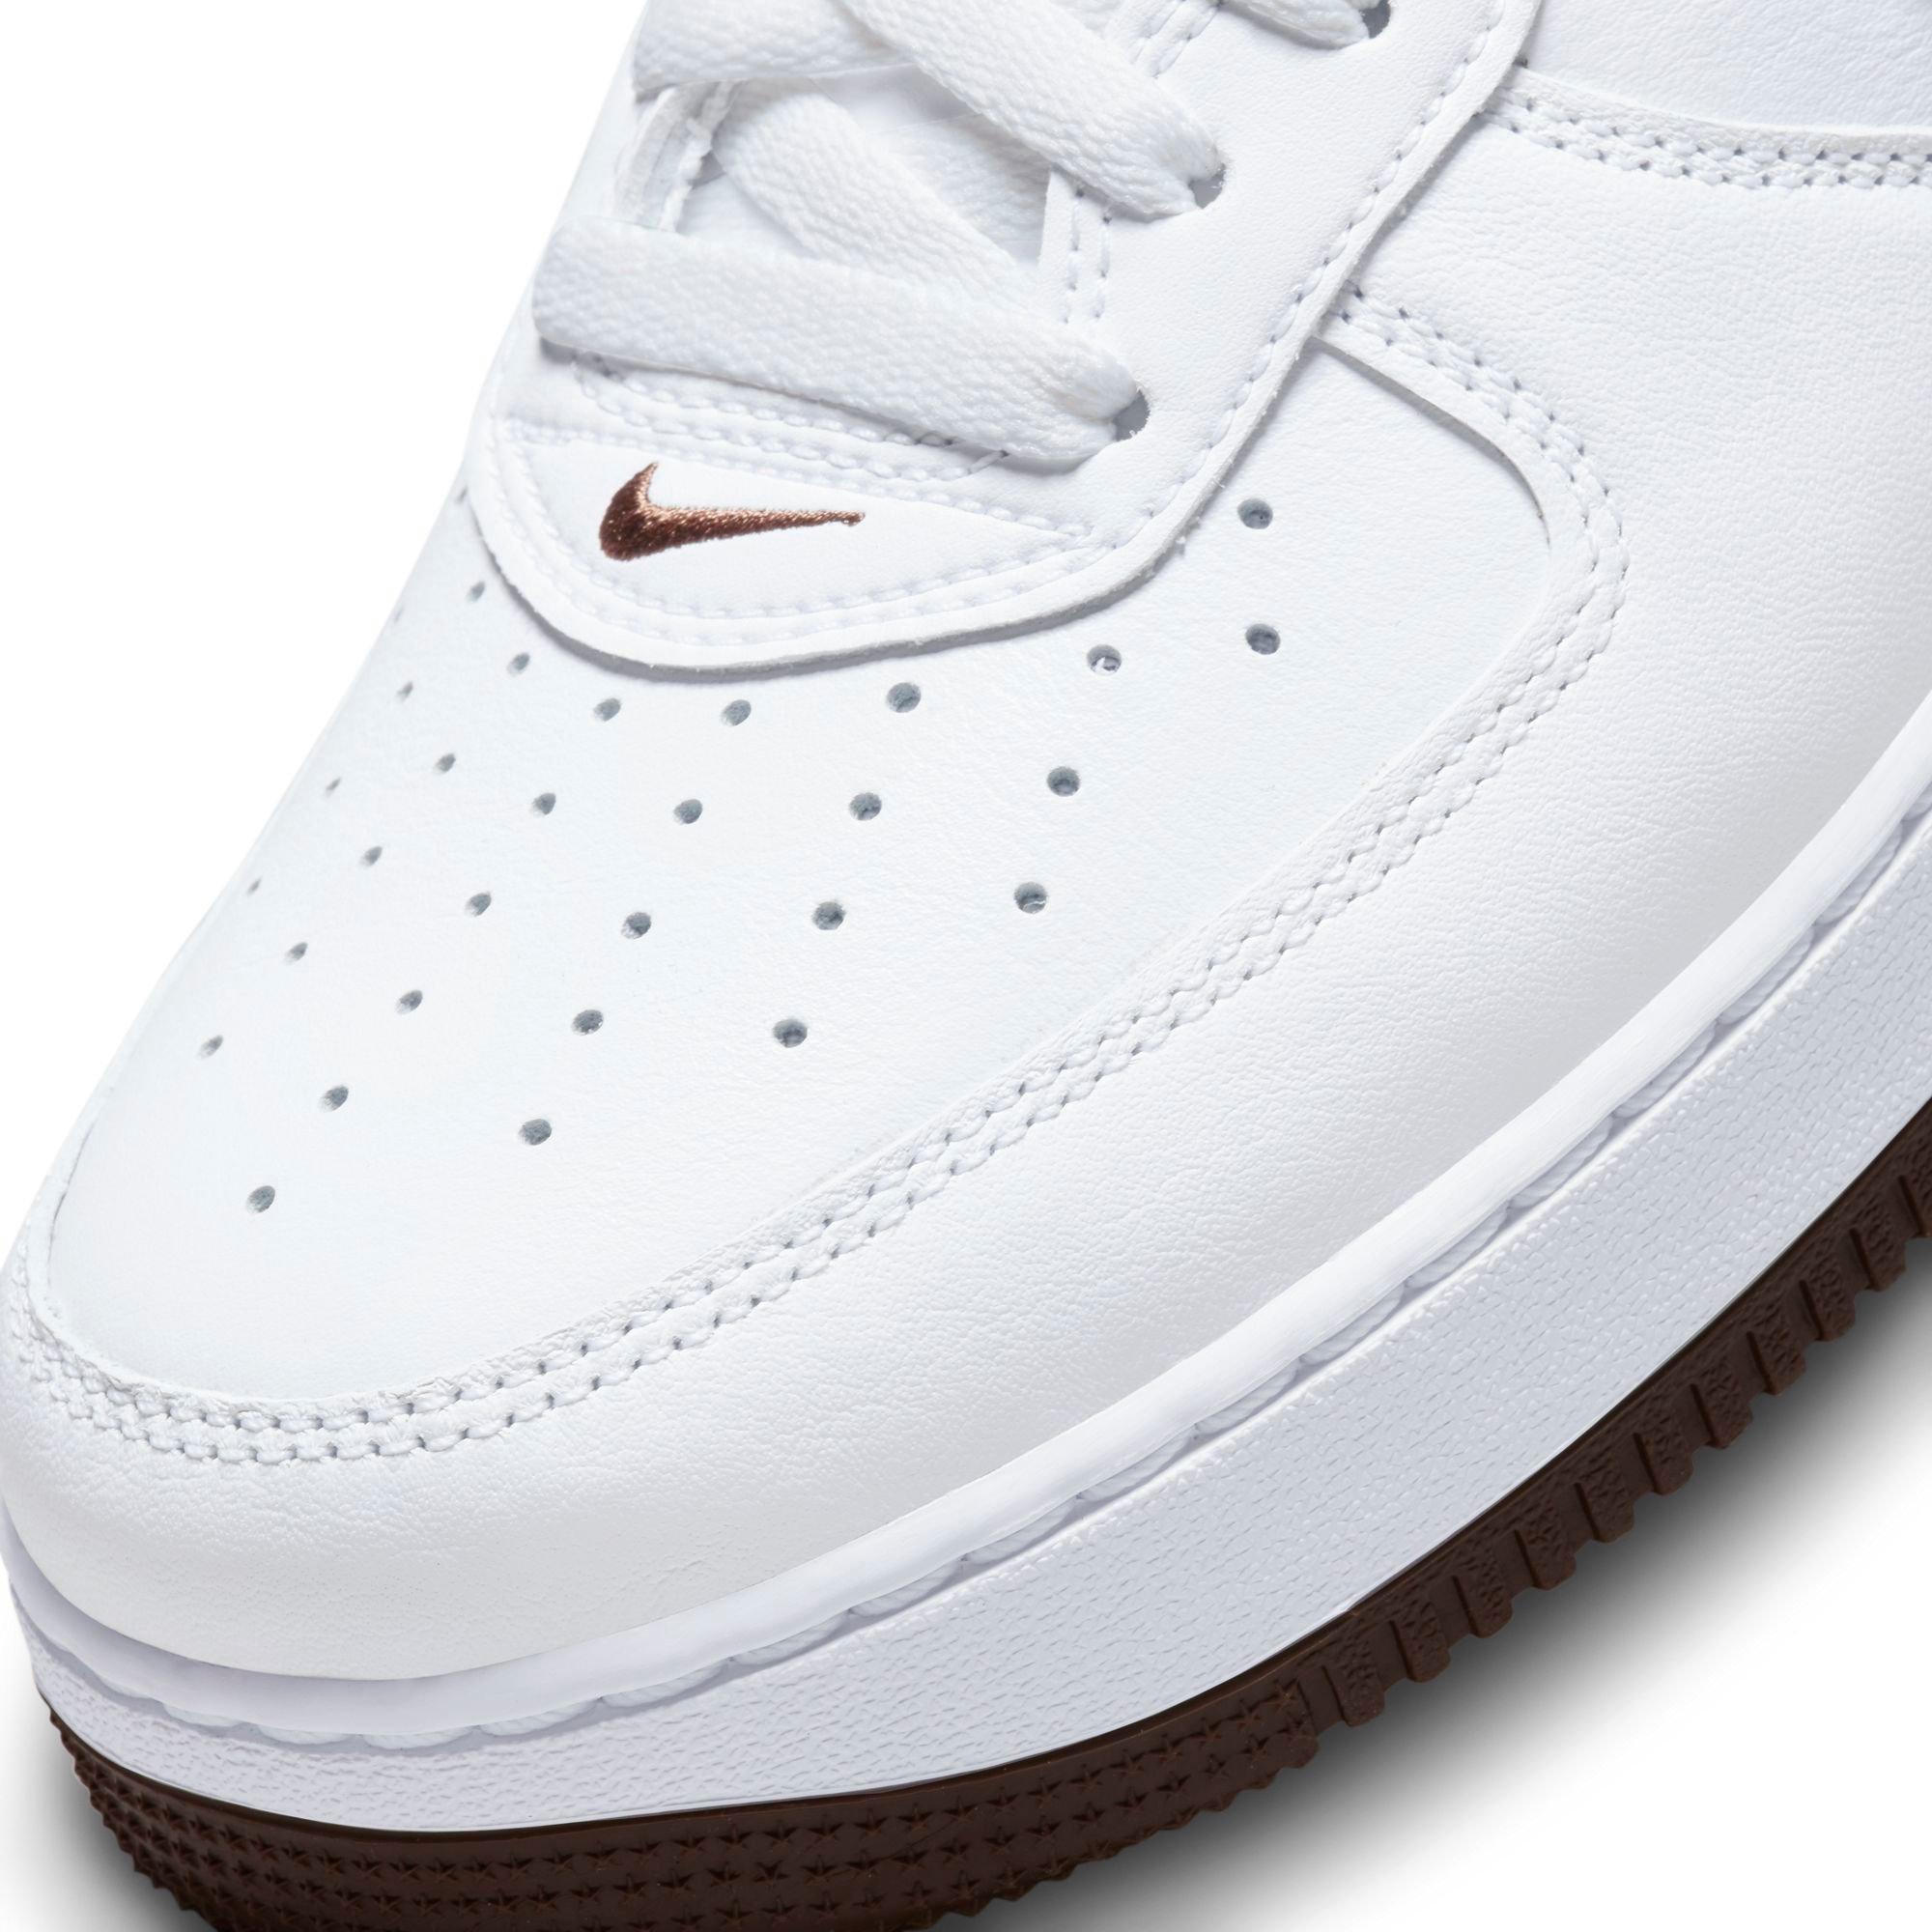 Men's shoes Nike Air Force 1 High Retro QS Metallic Gold/ White